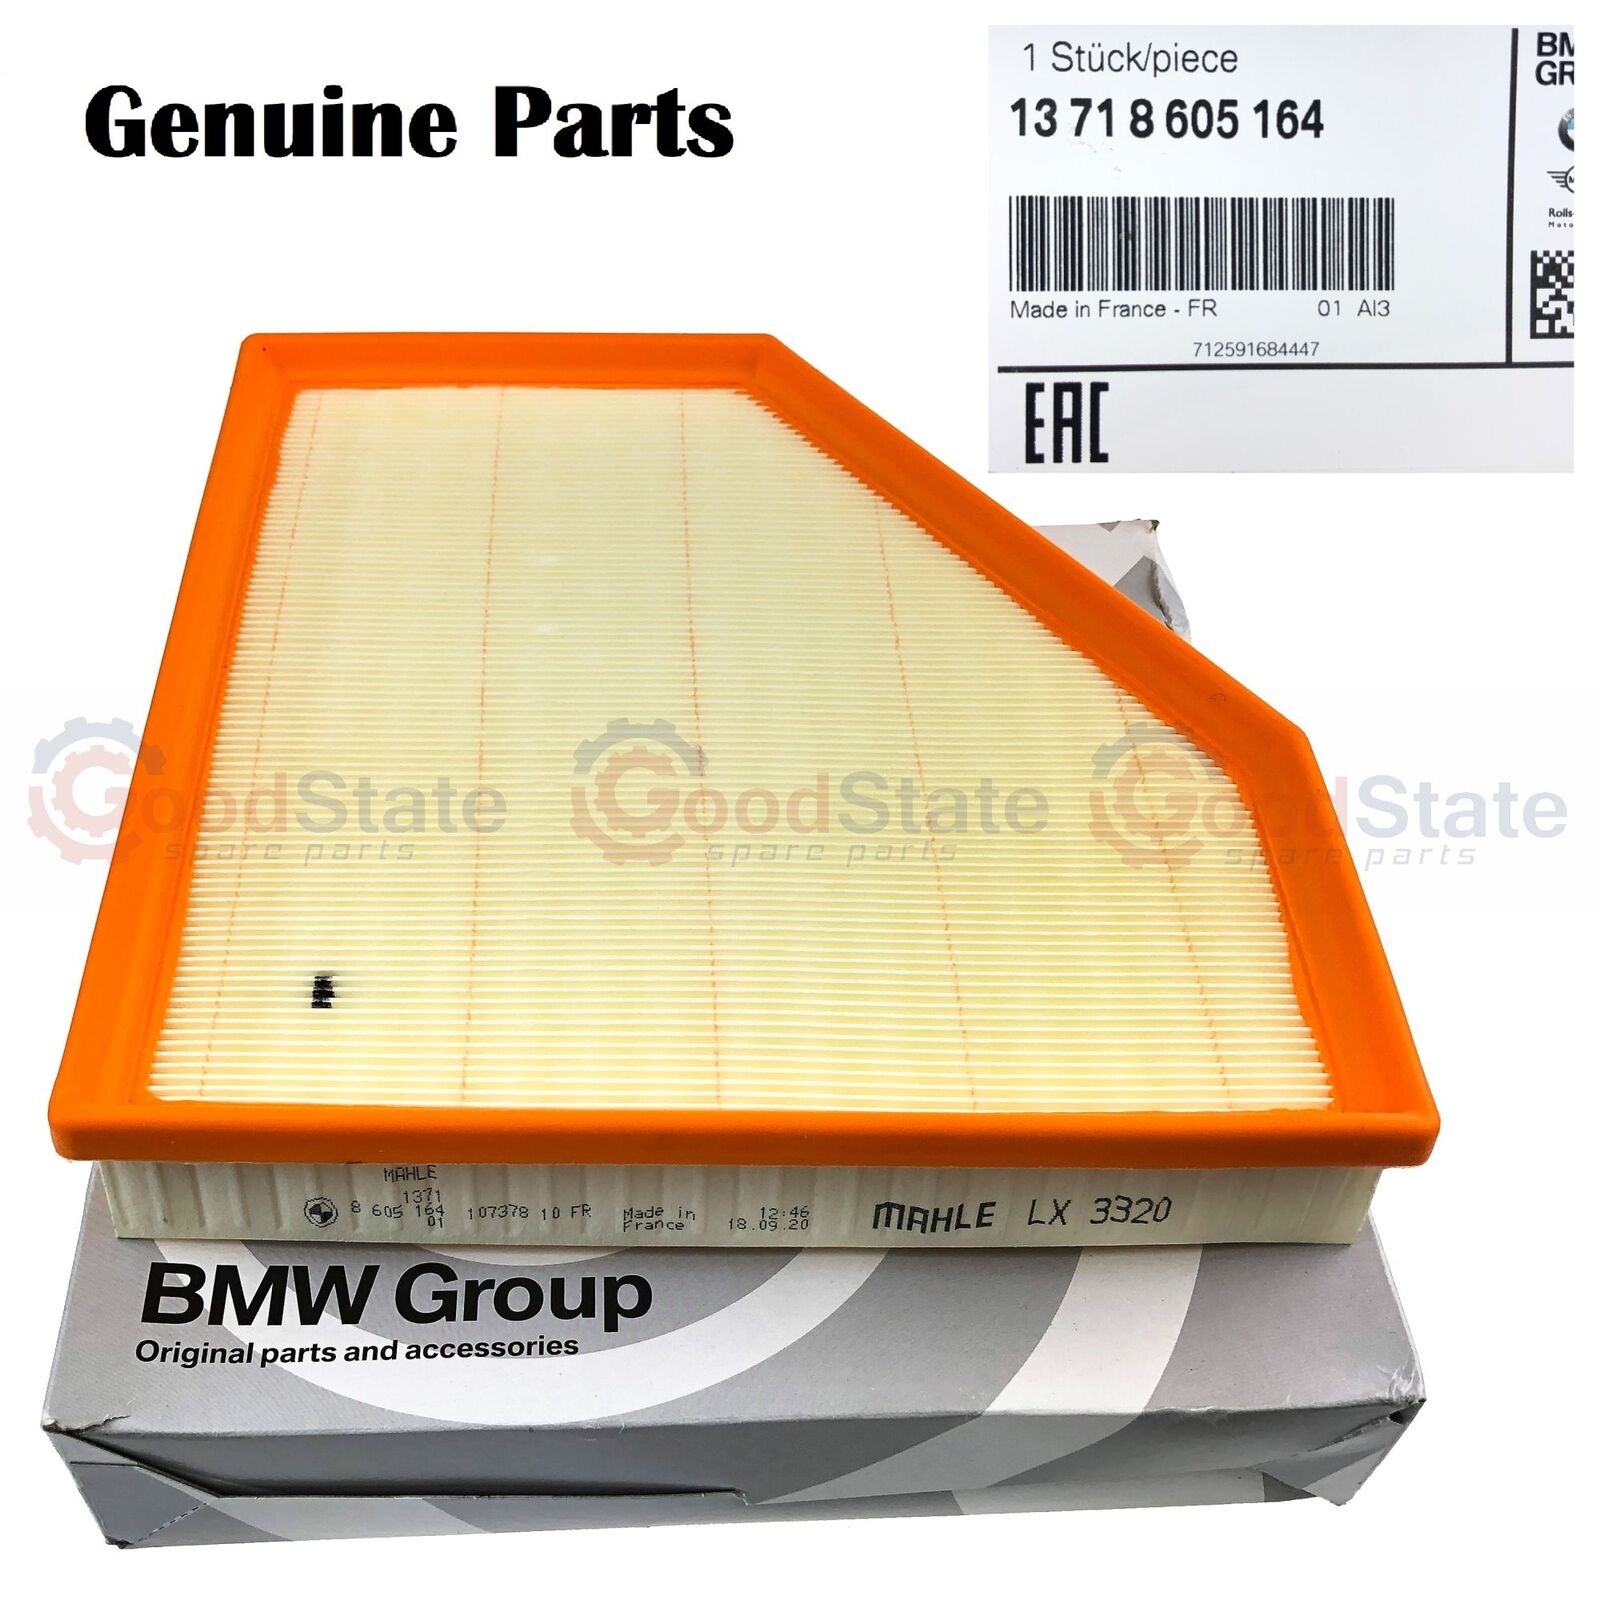 GENUINE BMW 1 Series F20 F21 10i 125i M140i Air Intake Cleaner Filter